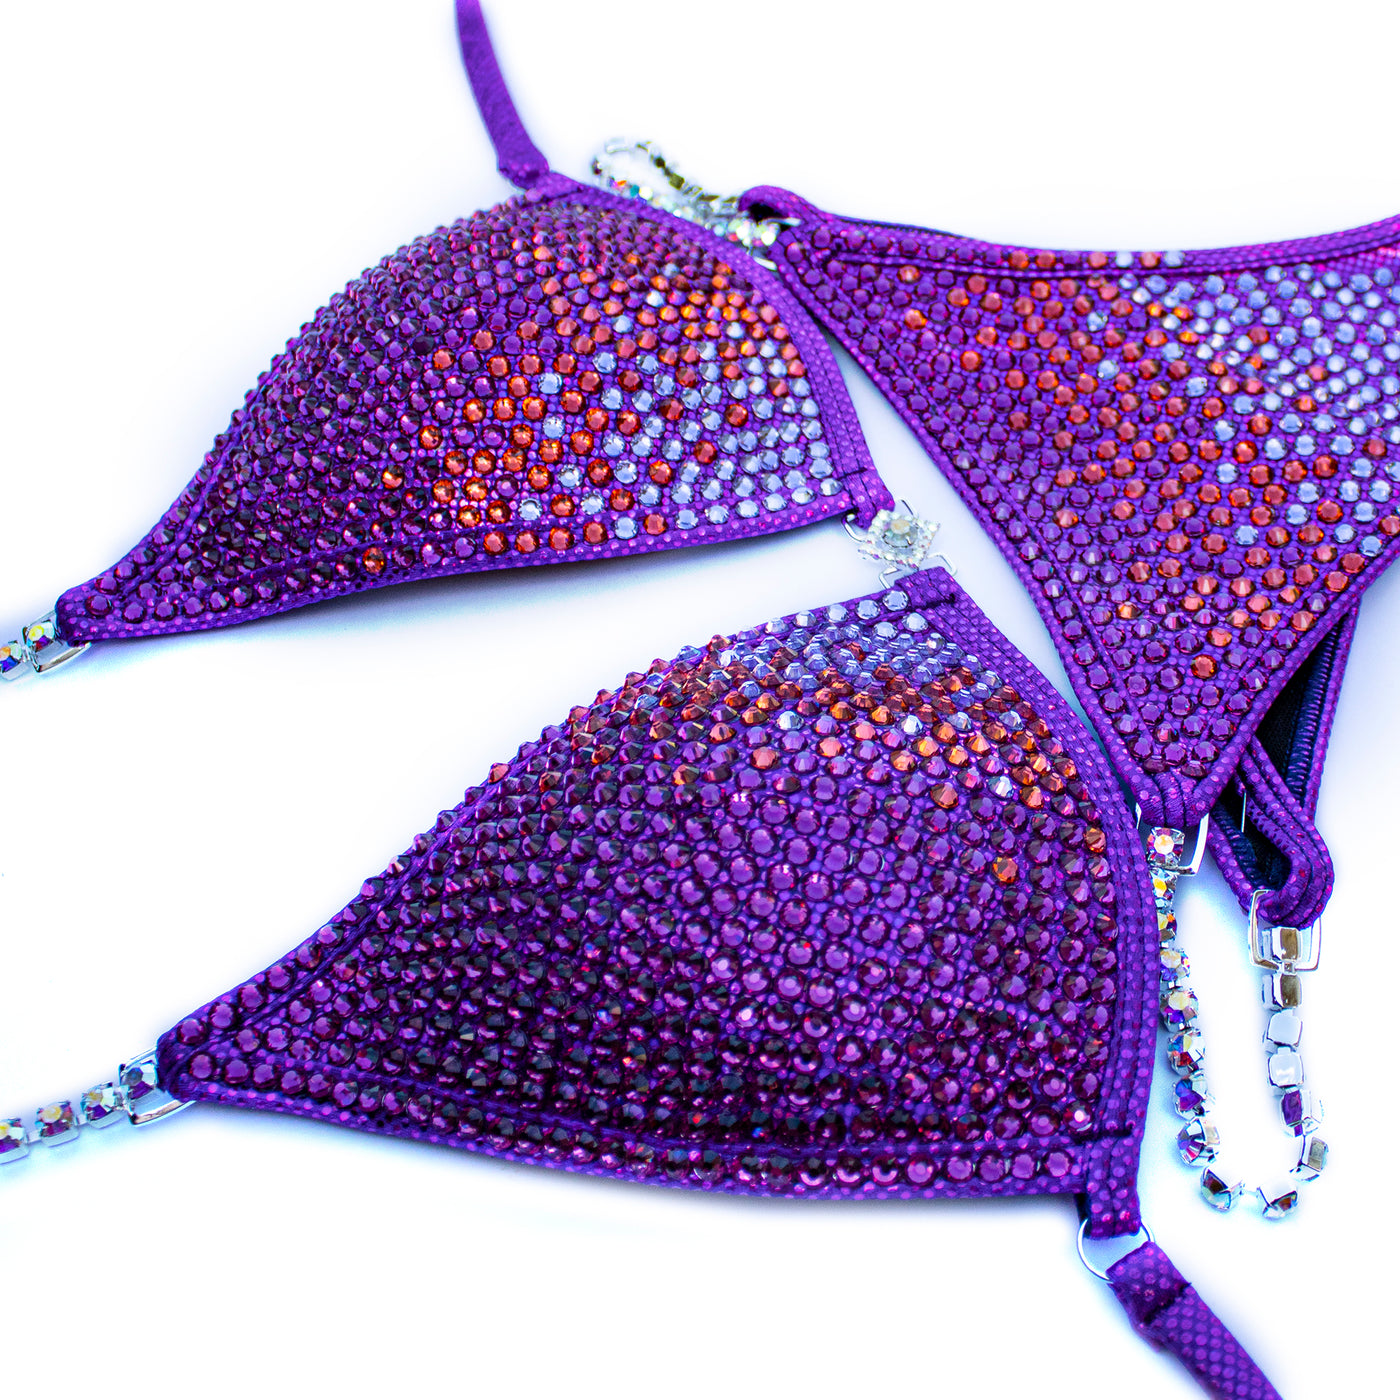 Raspberry Gradient Competition Bikini | OMG Bikinis